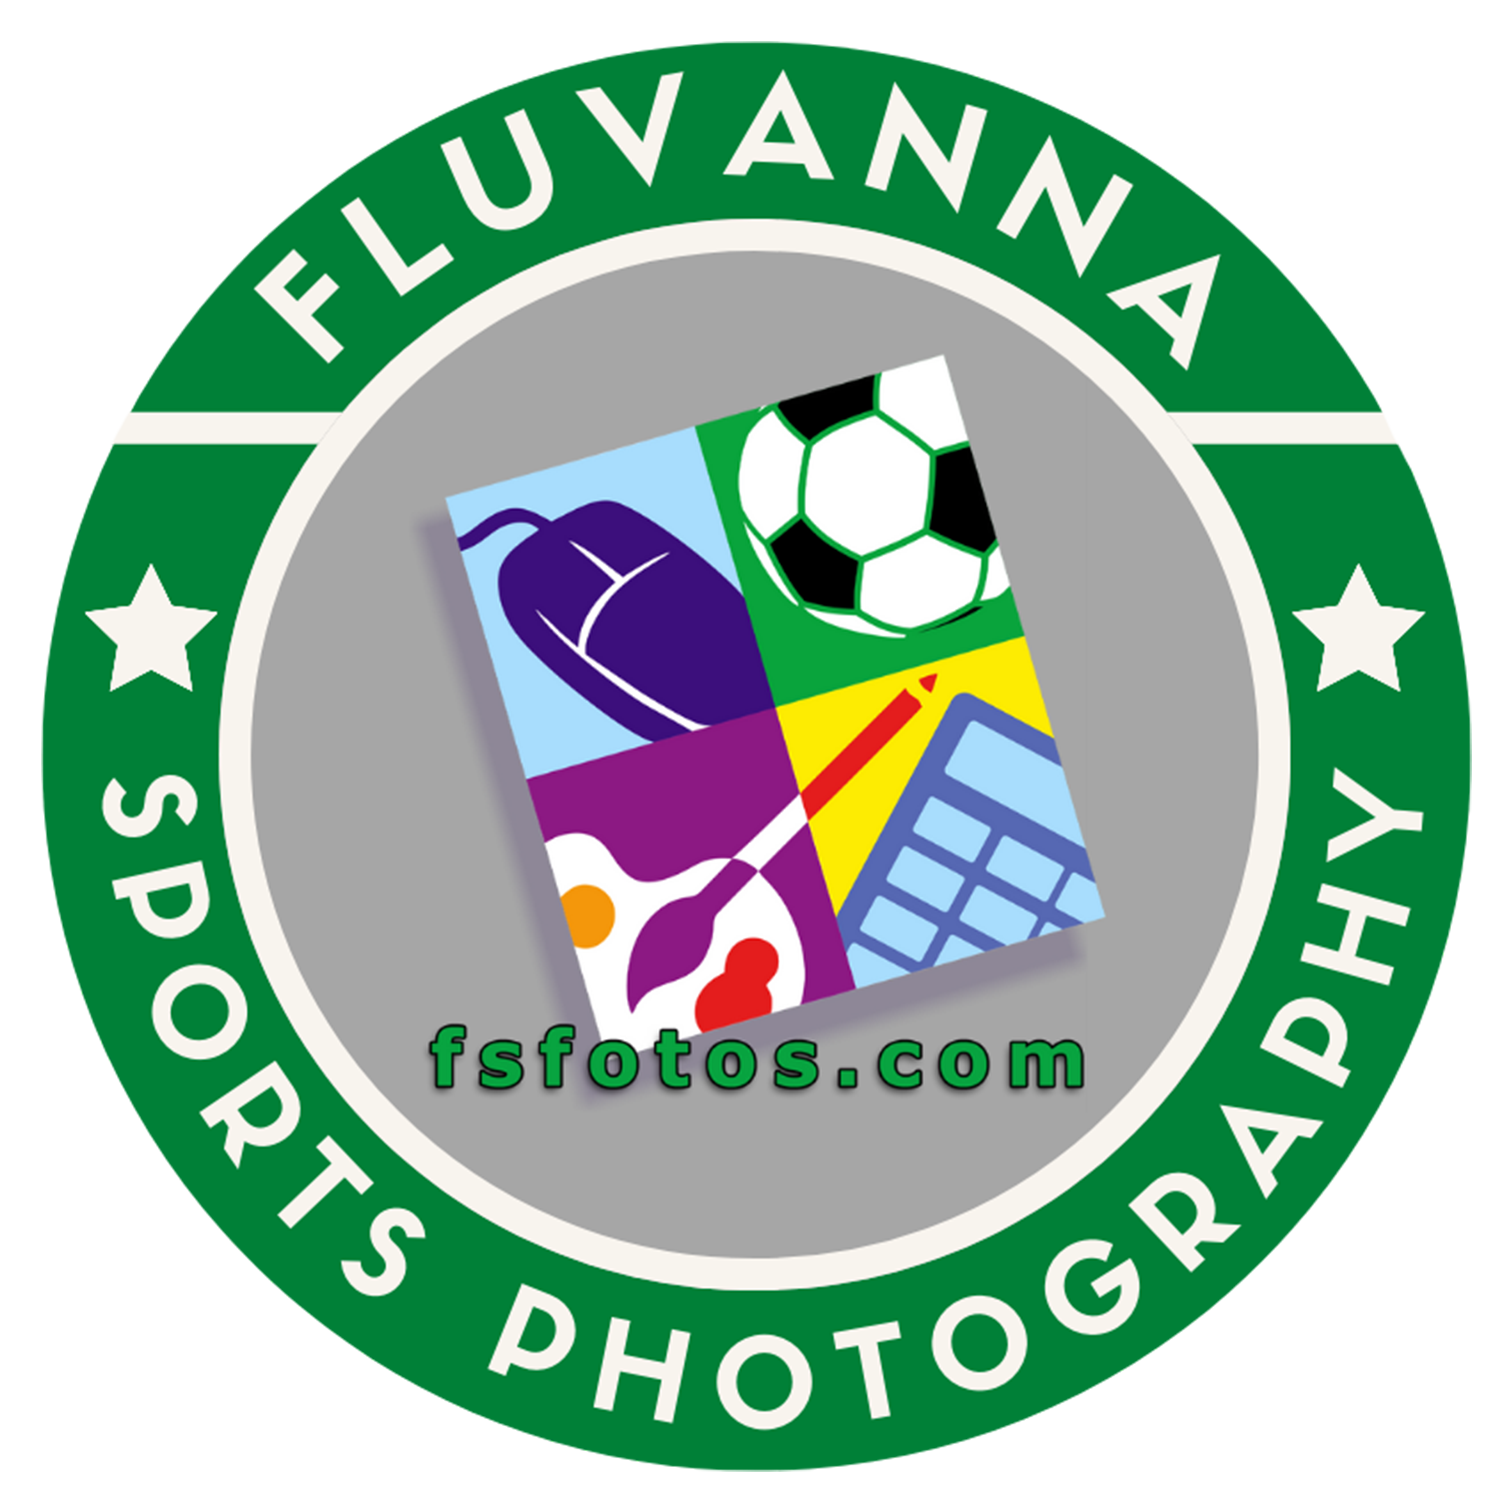 Fluvanna Sports Photography